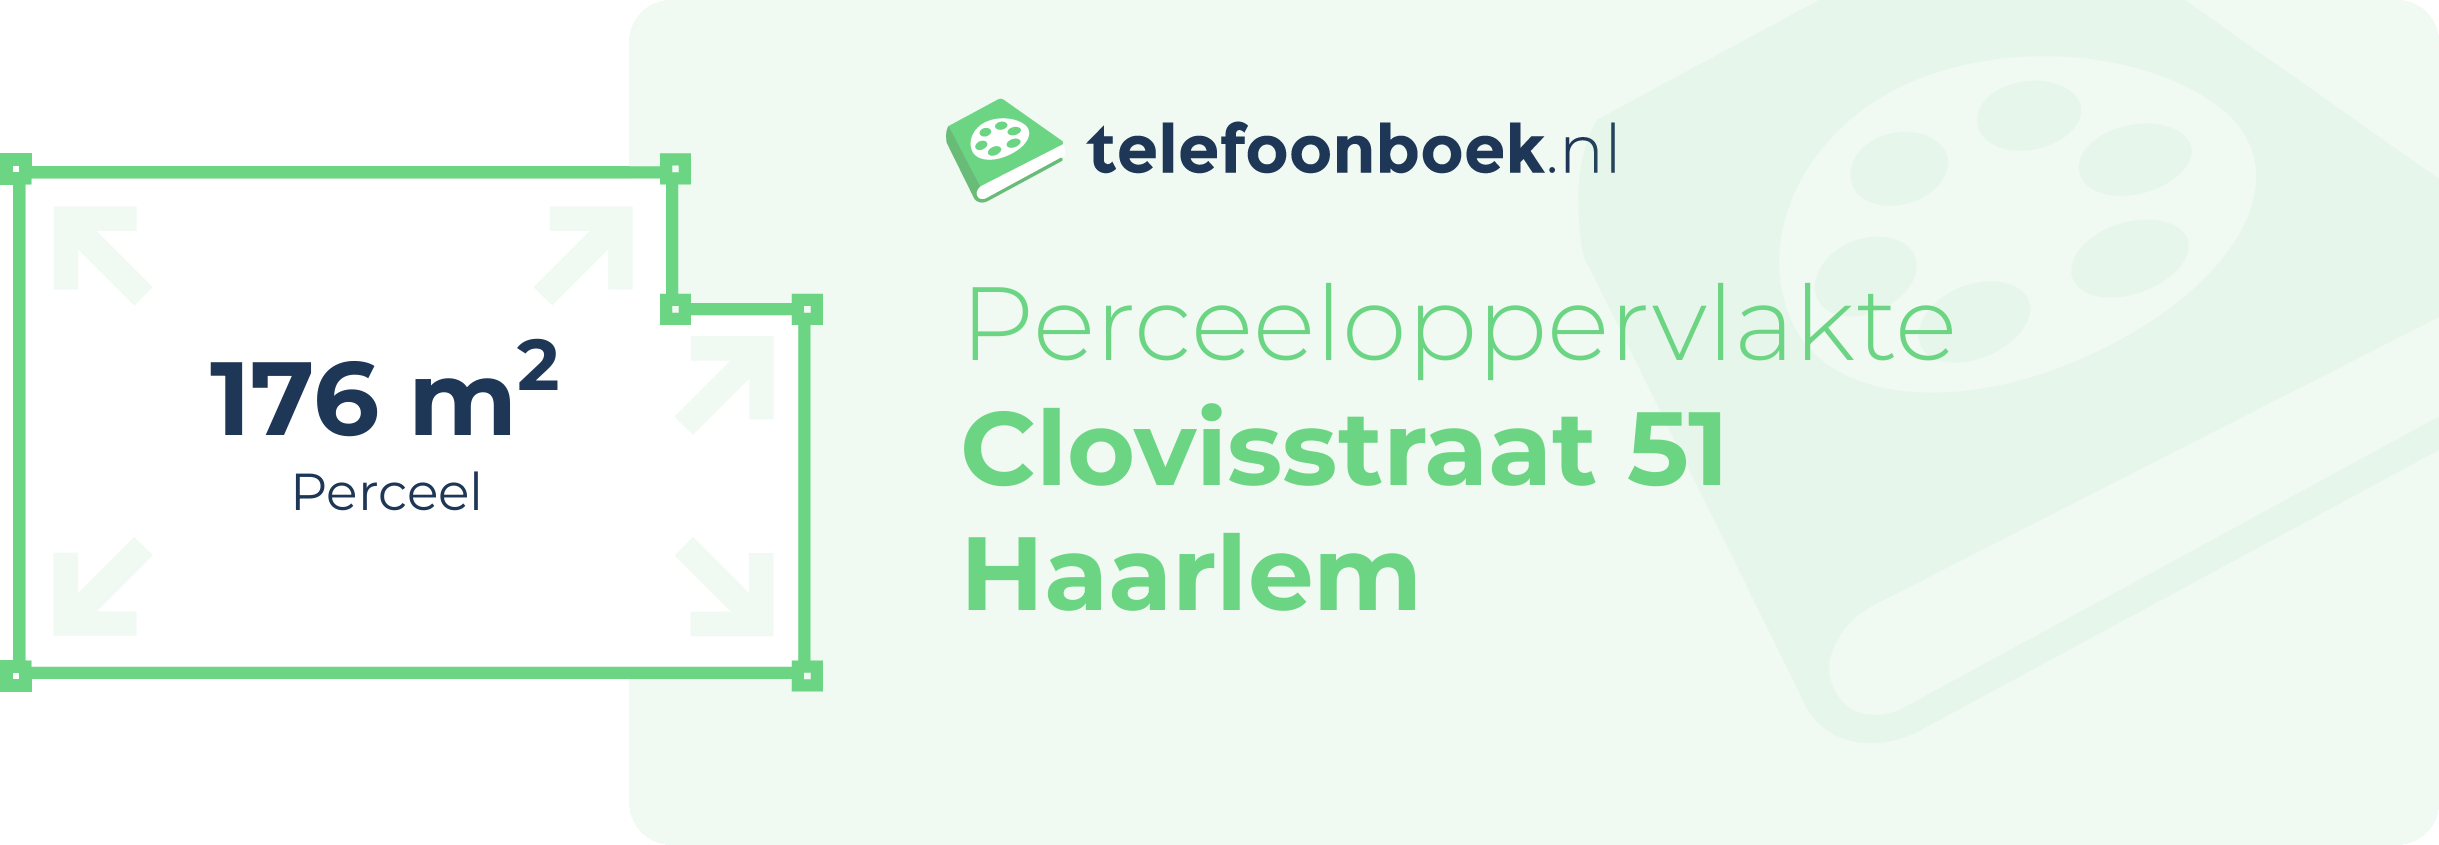 Perceeloppervlakte Clovisstraat 51 Haarlem